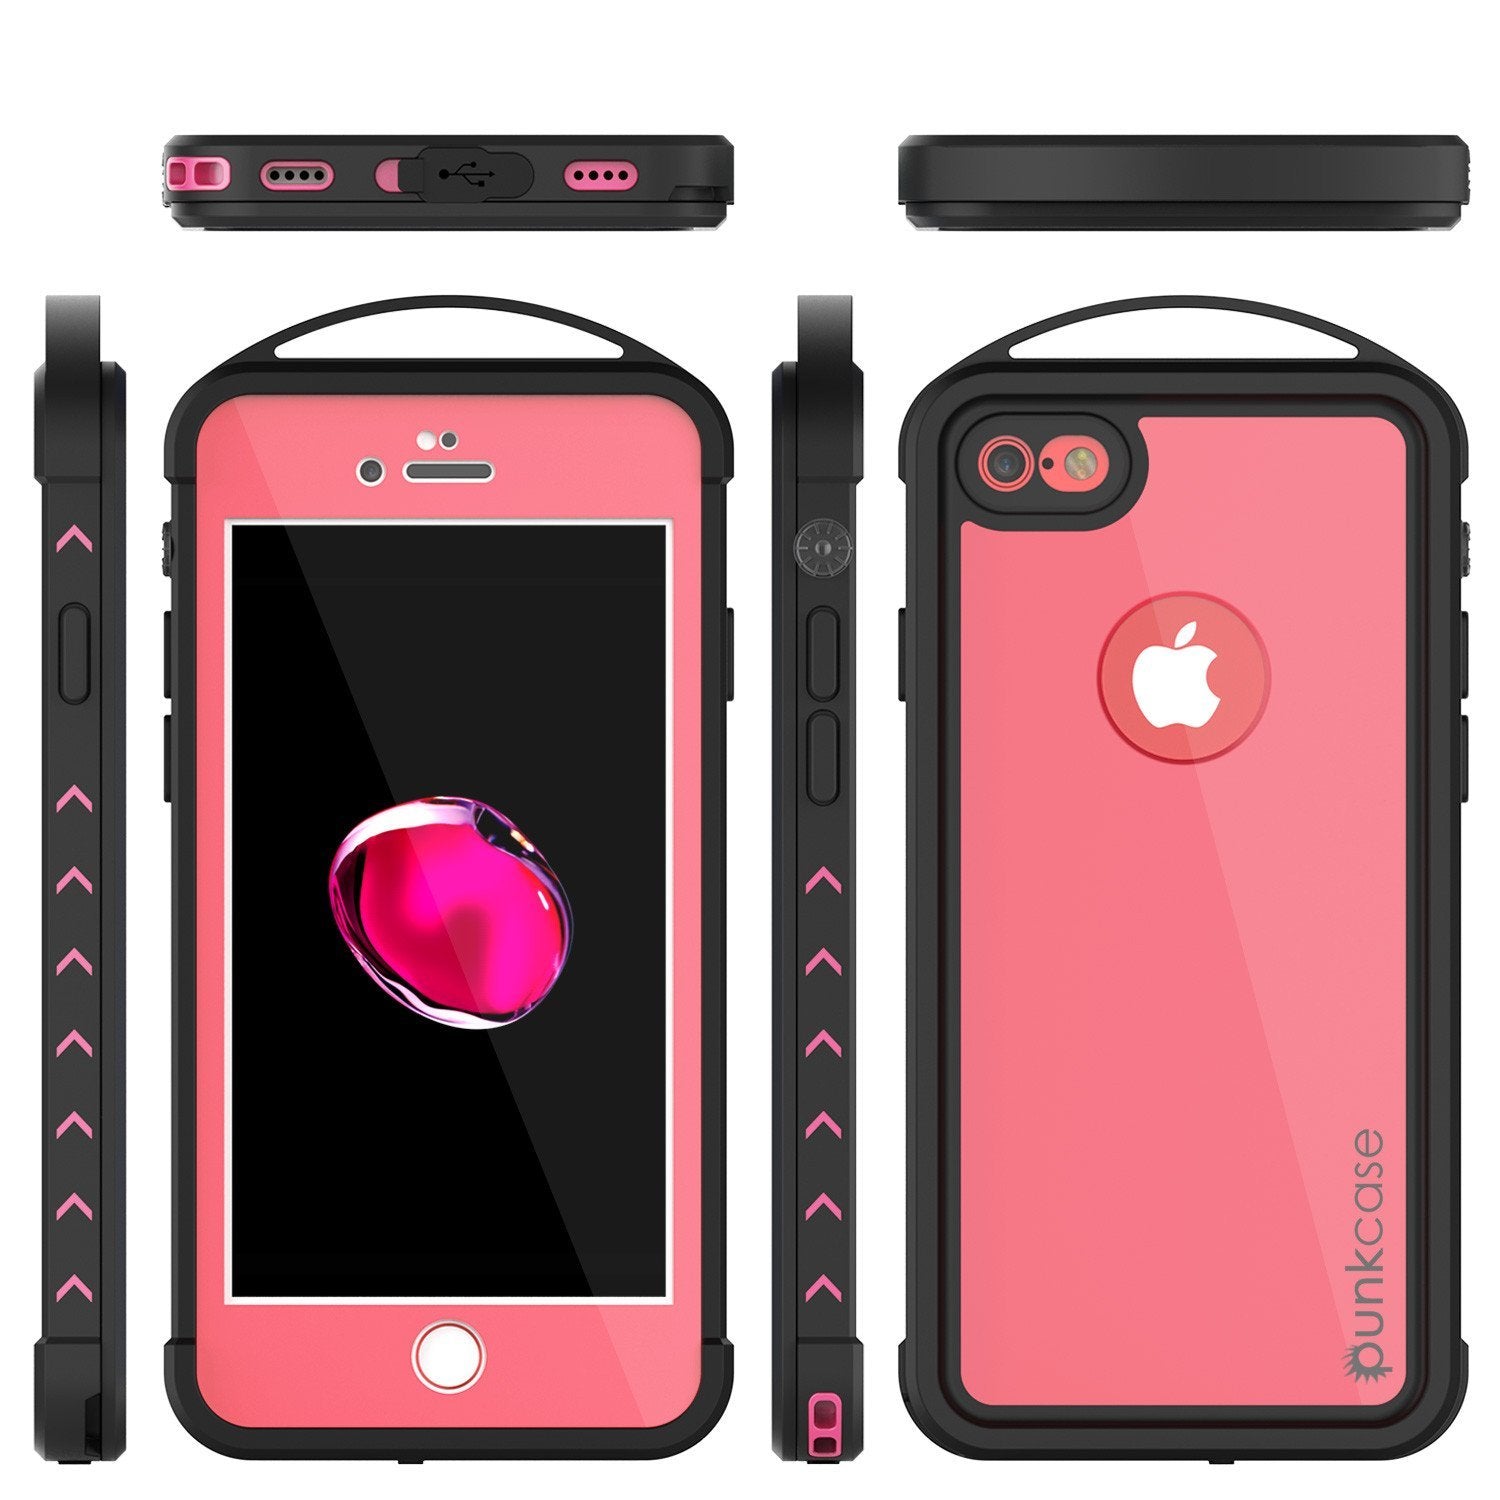 iPhone 8 Waterproof Case, Punkcase ALPINE Series, Pink | Heavy Duty Armor Cover